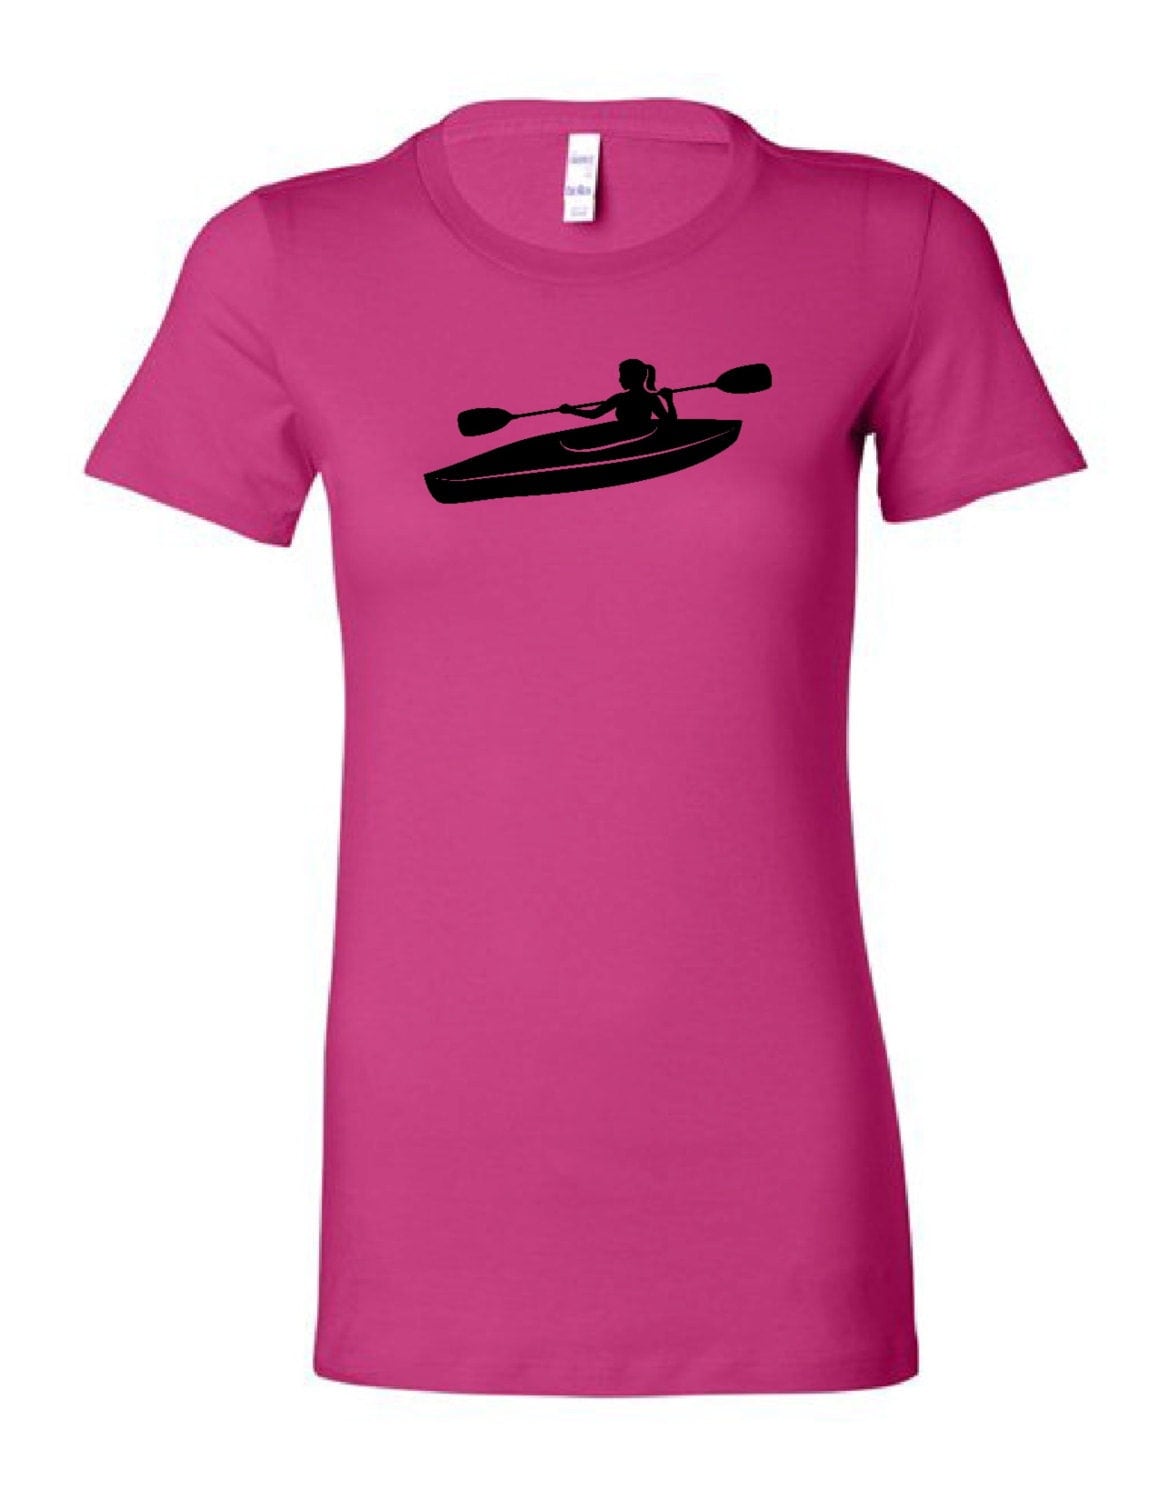 Women's kayak t-shirt MORE COLOR OPTIONS